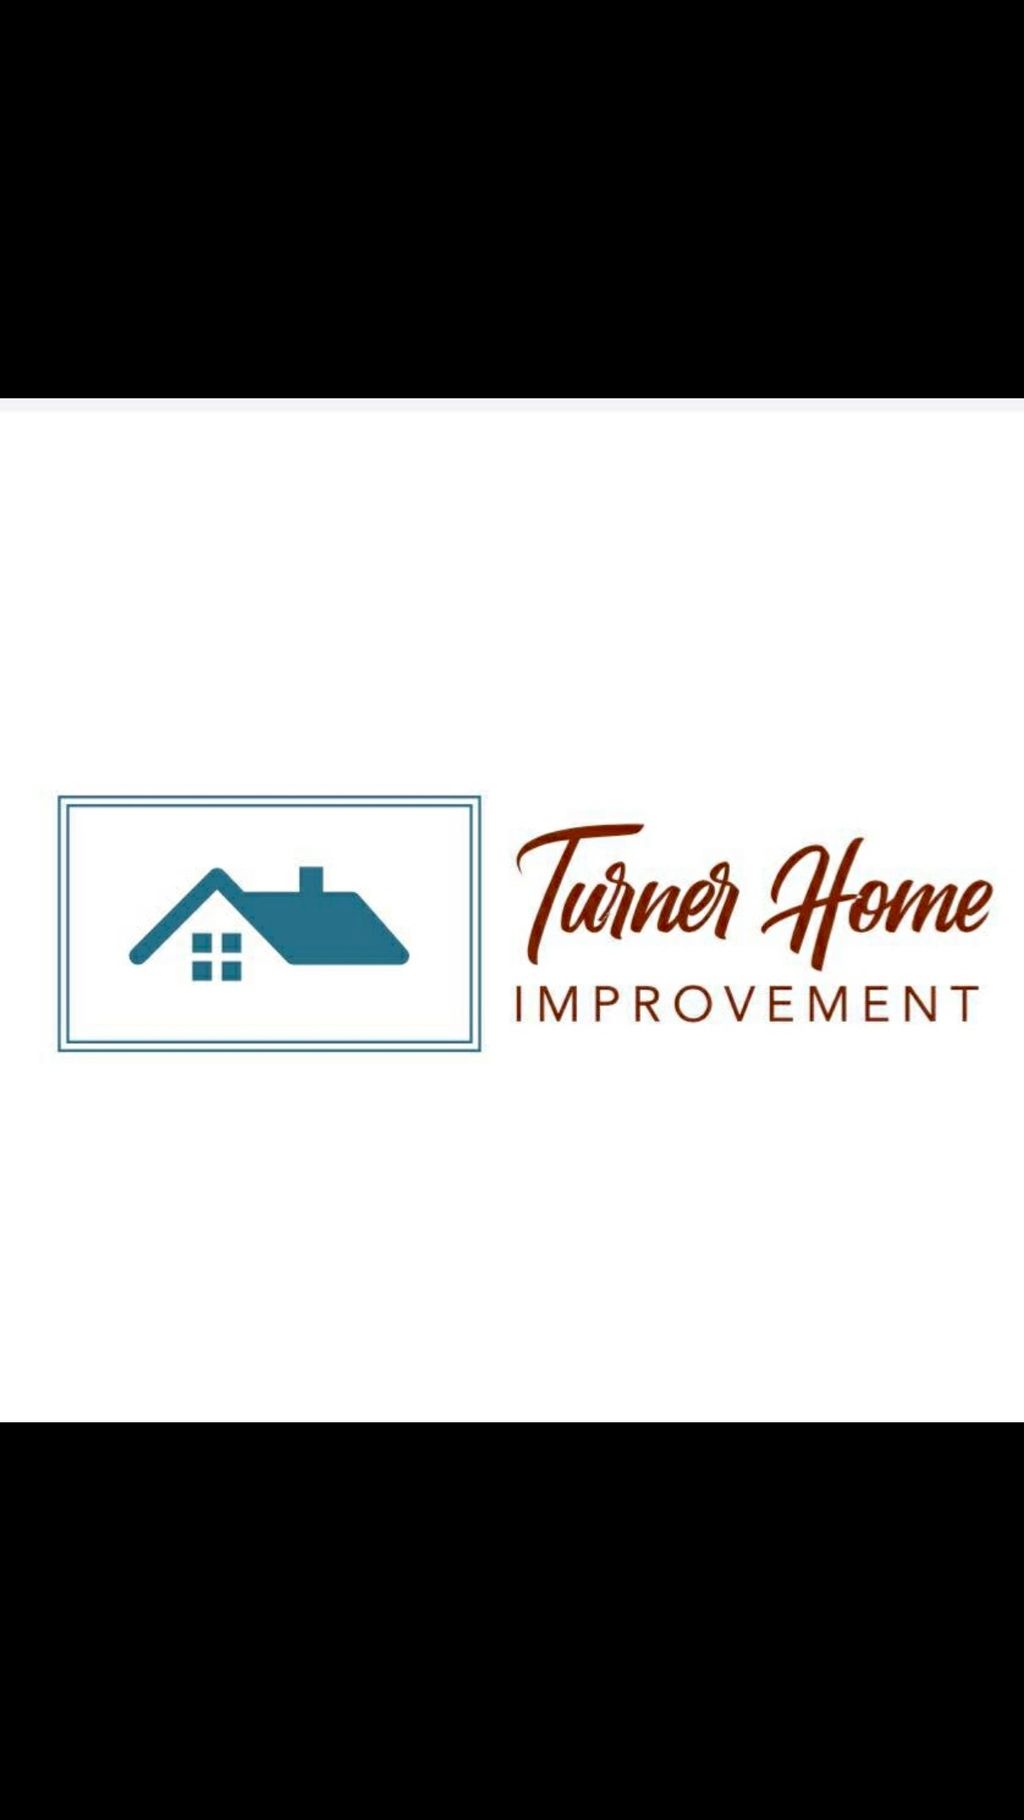 Turner Home Improvement